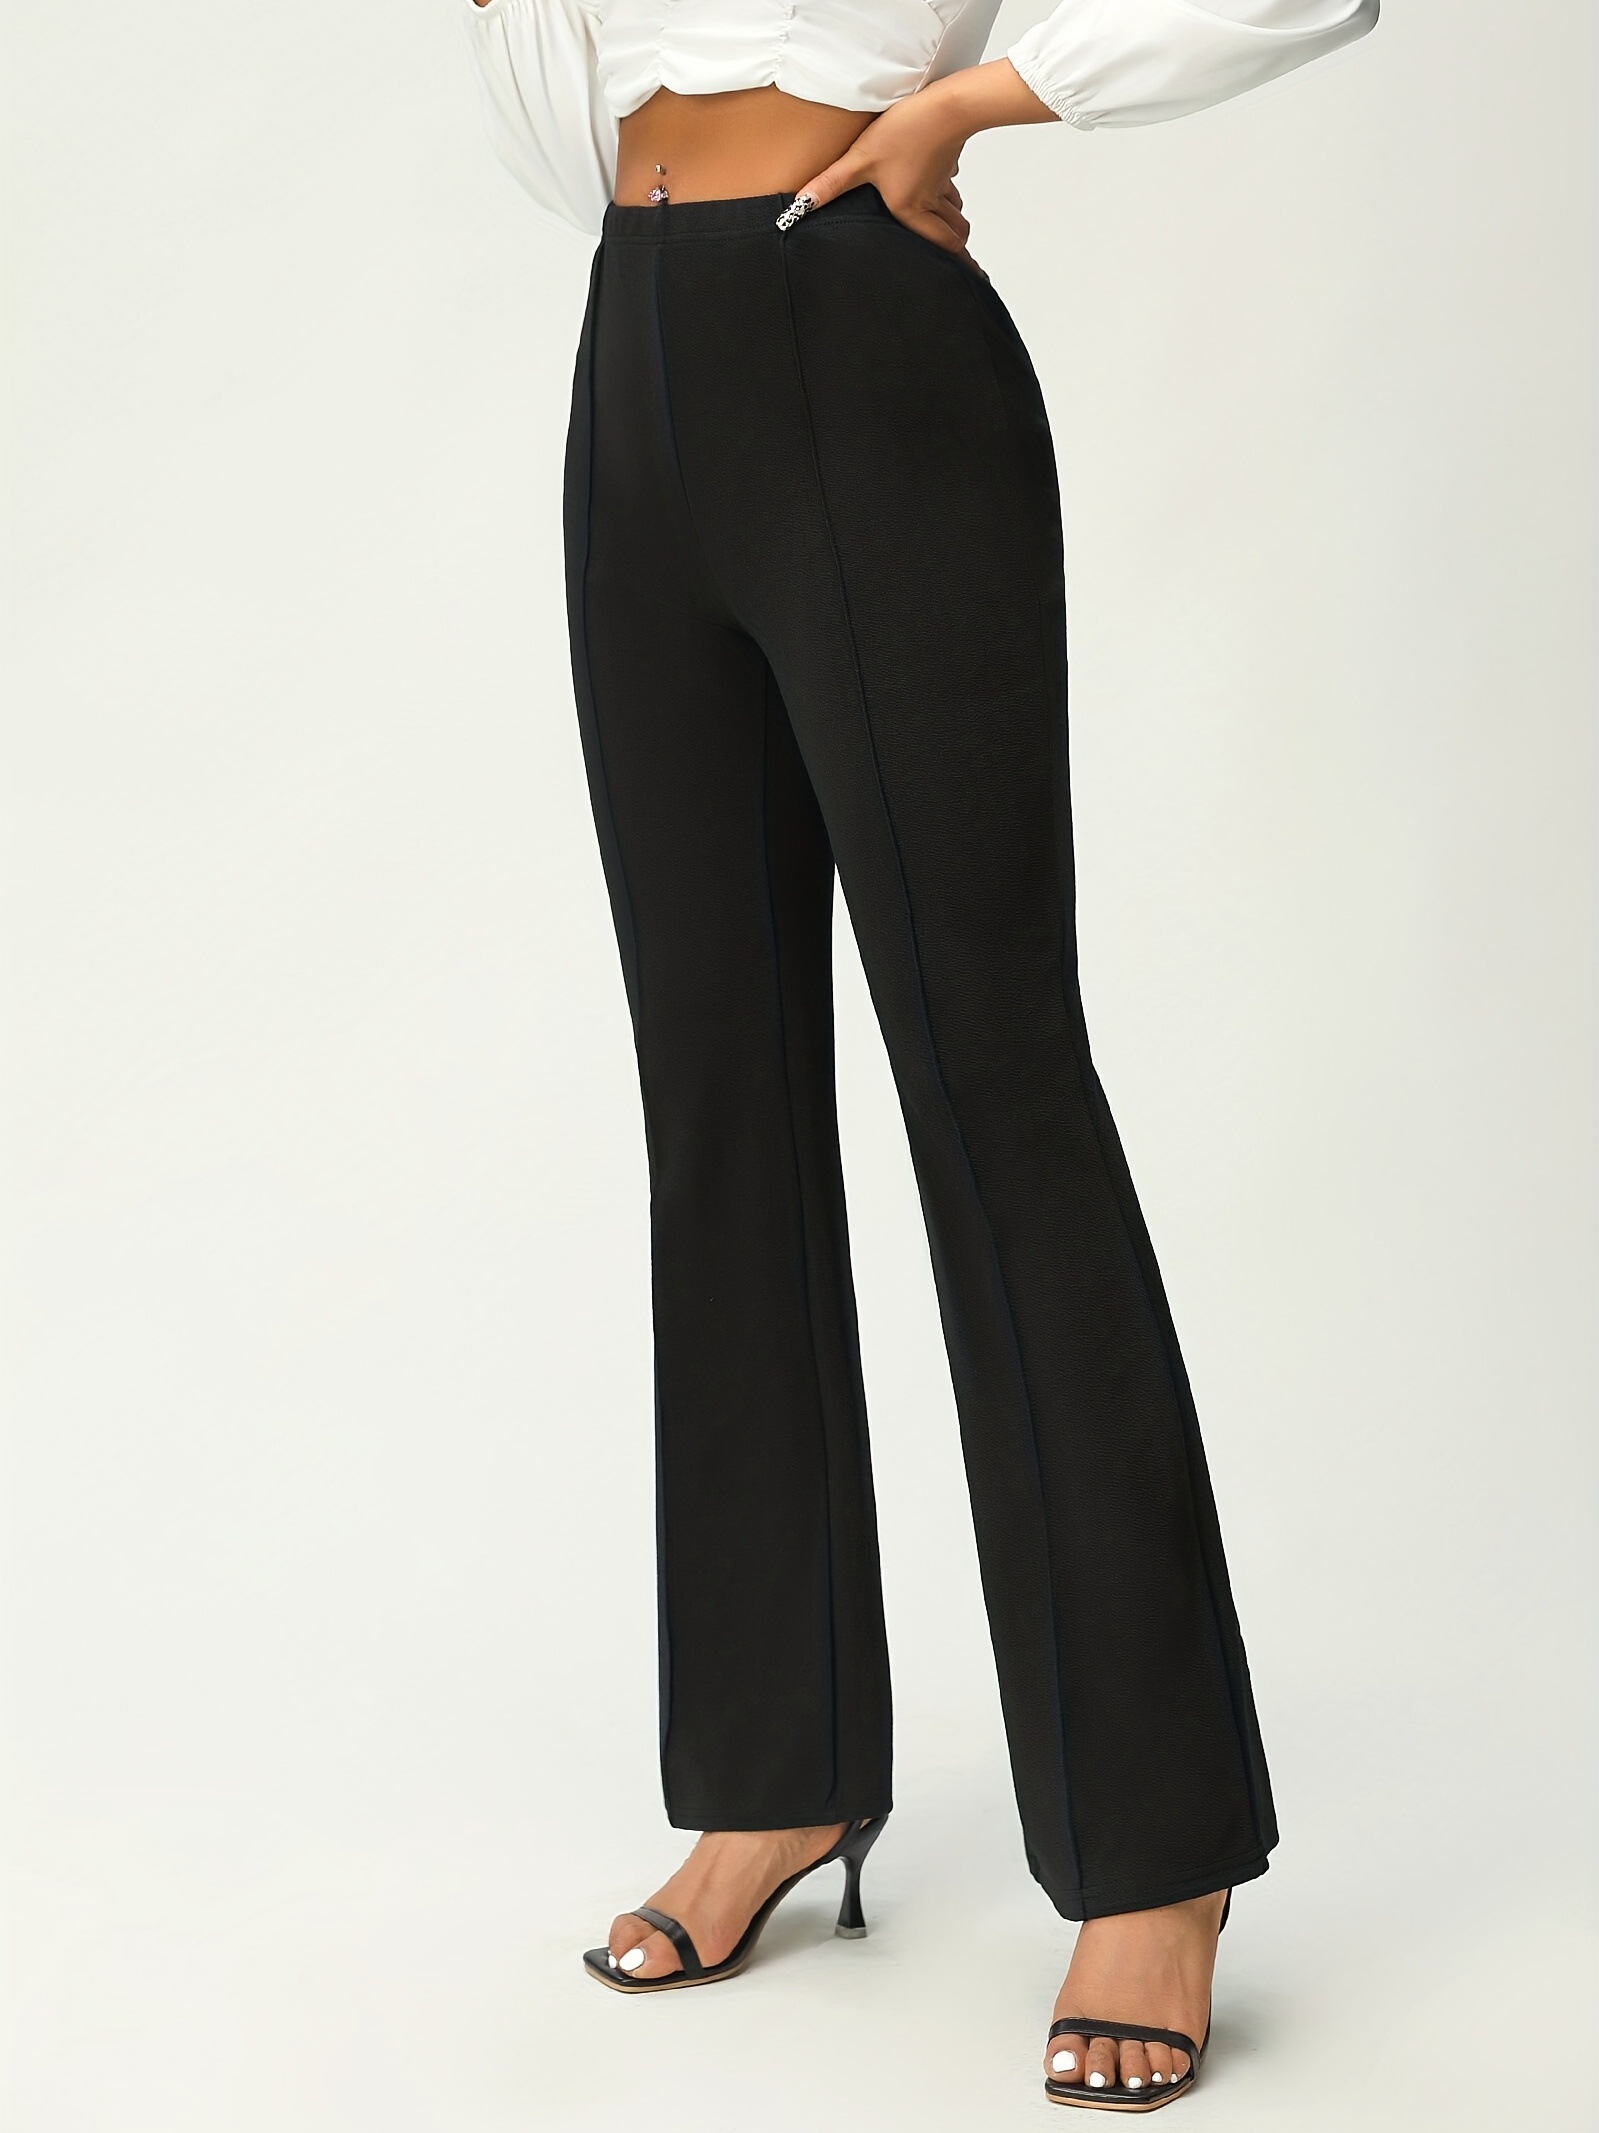 Allegra K Women's Business Elegant High Waist Stretch Flare Pants Work  Trousers Black X-Small